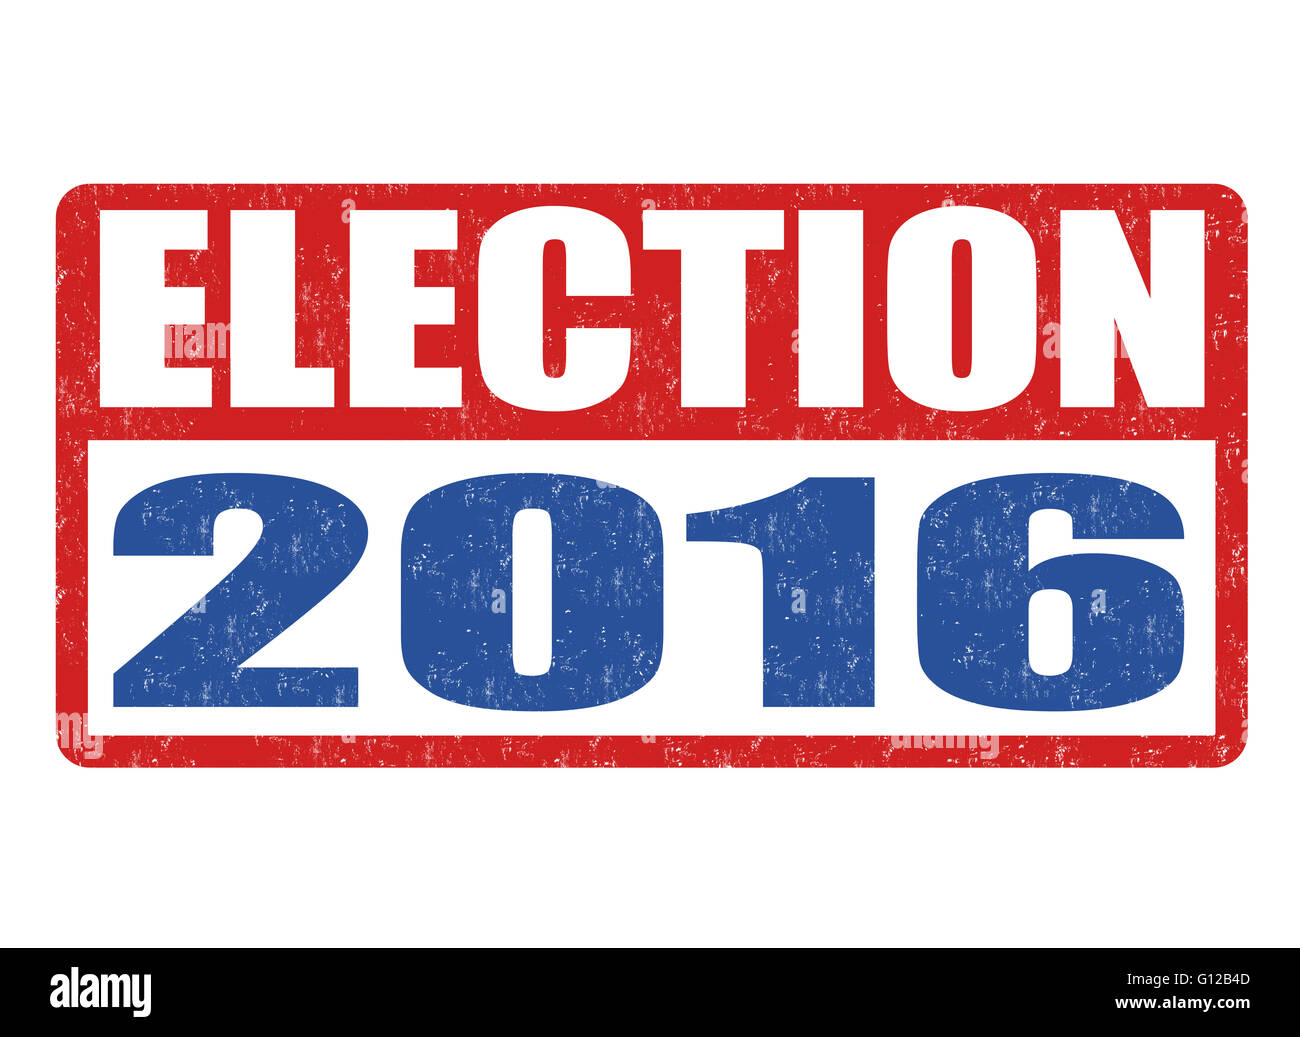 Élection 2016 grunge tampons sur fond blanc, vector illustration Banque D'Images